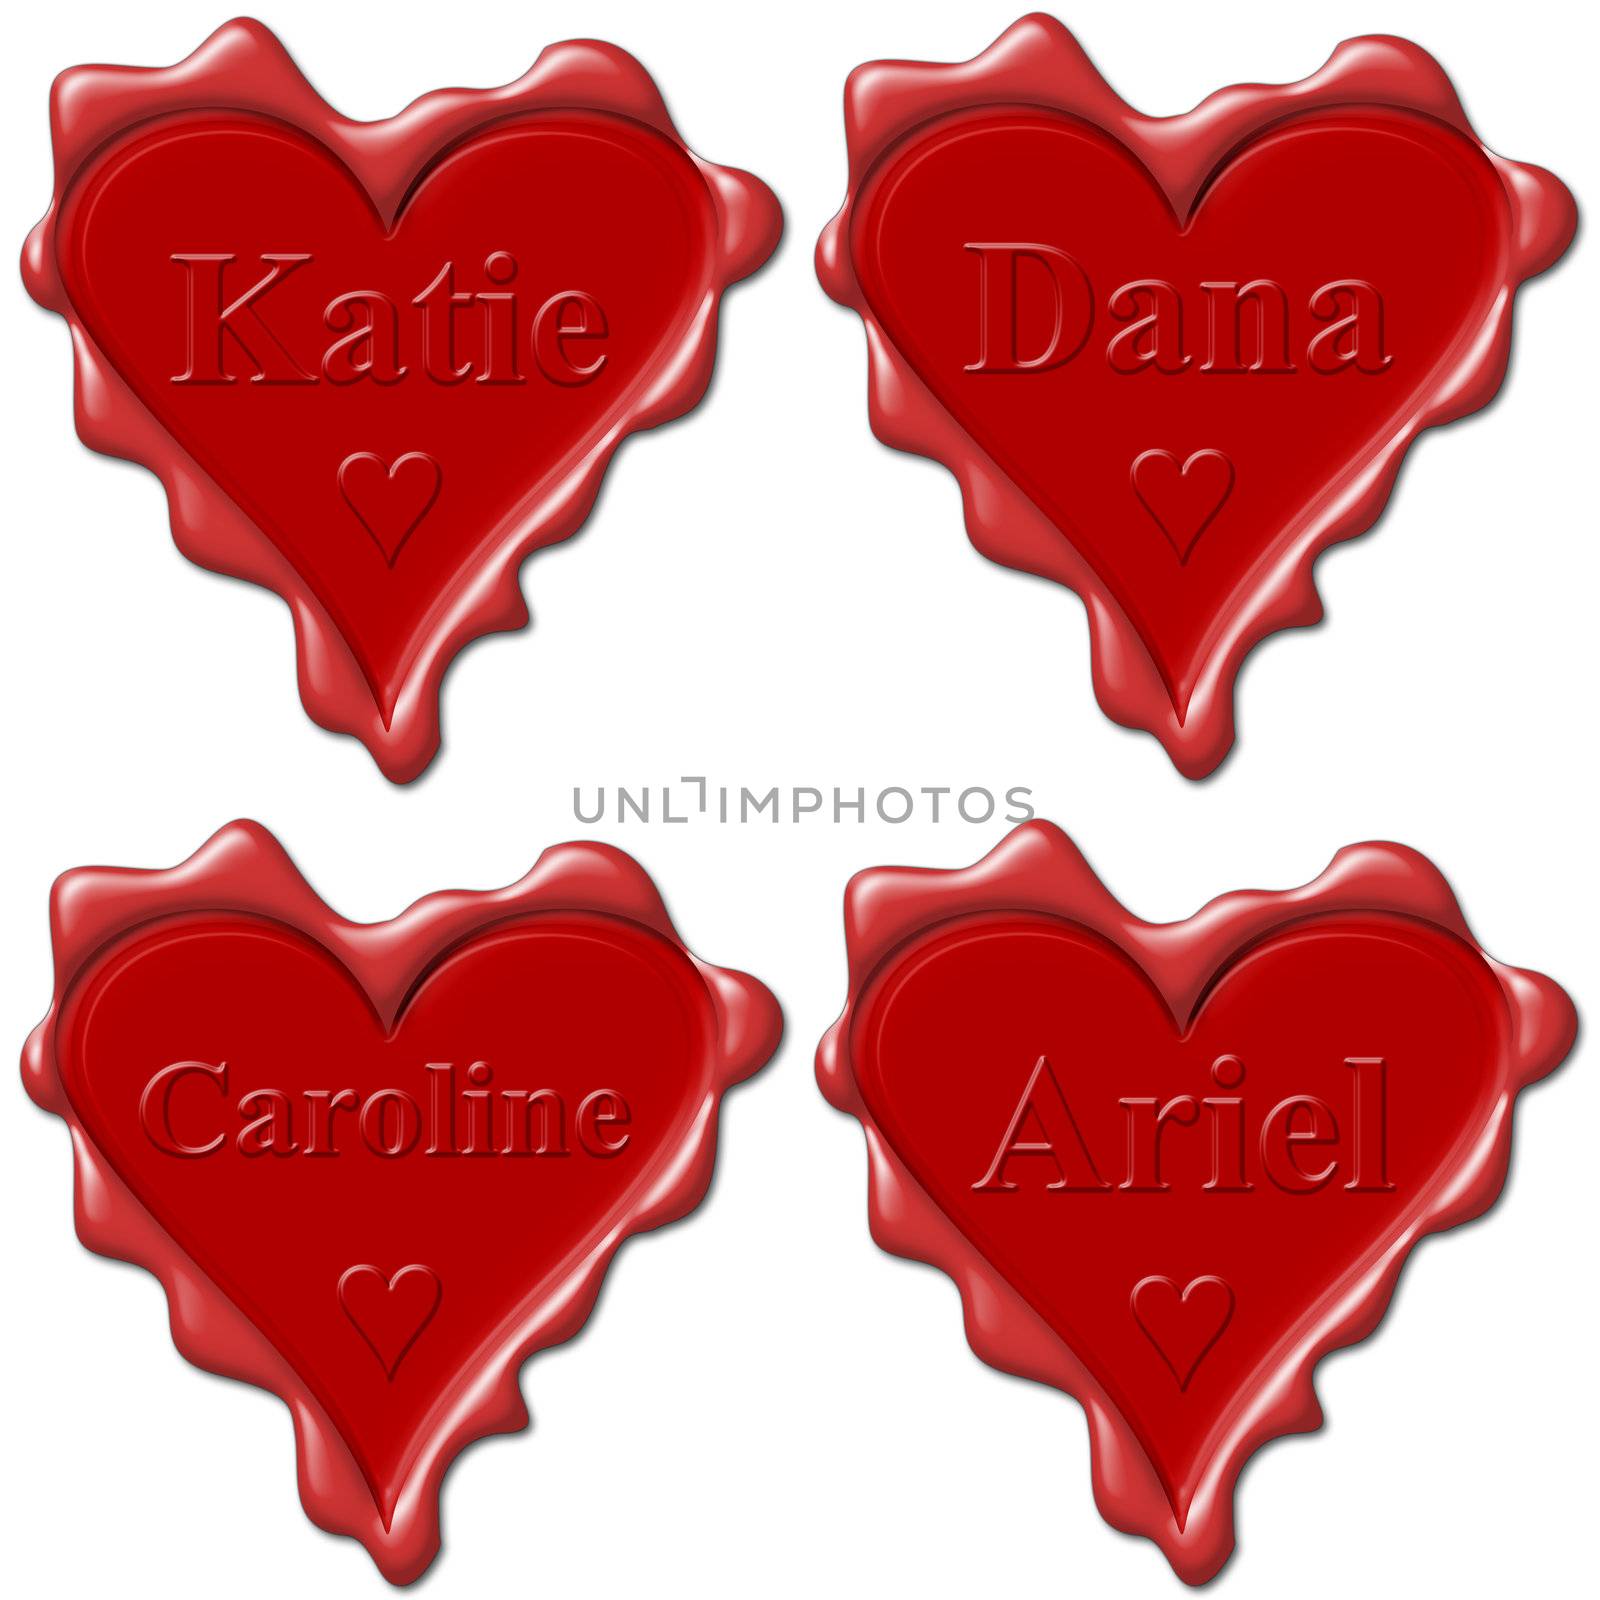 Valentine love hearts with names: Katie, Dana, Caroline, Ariel